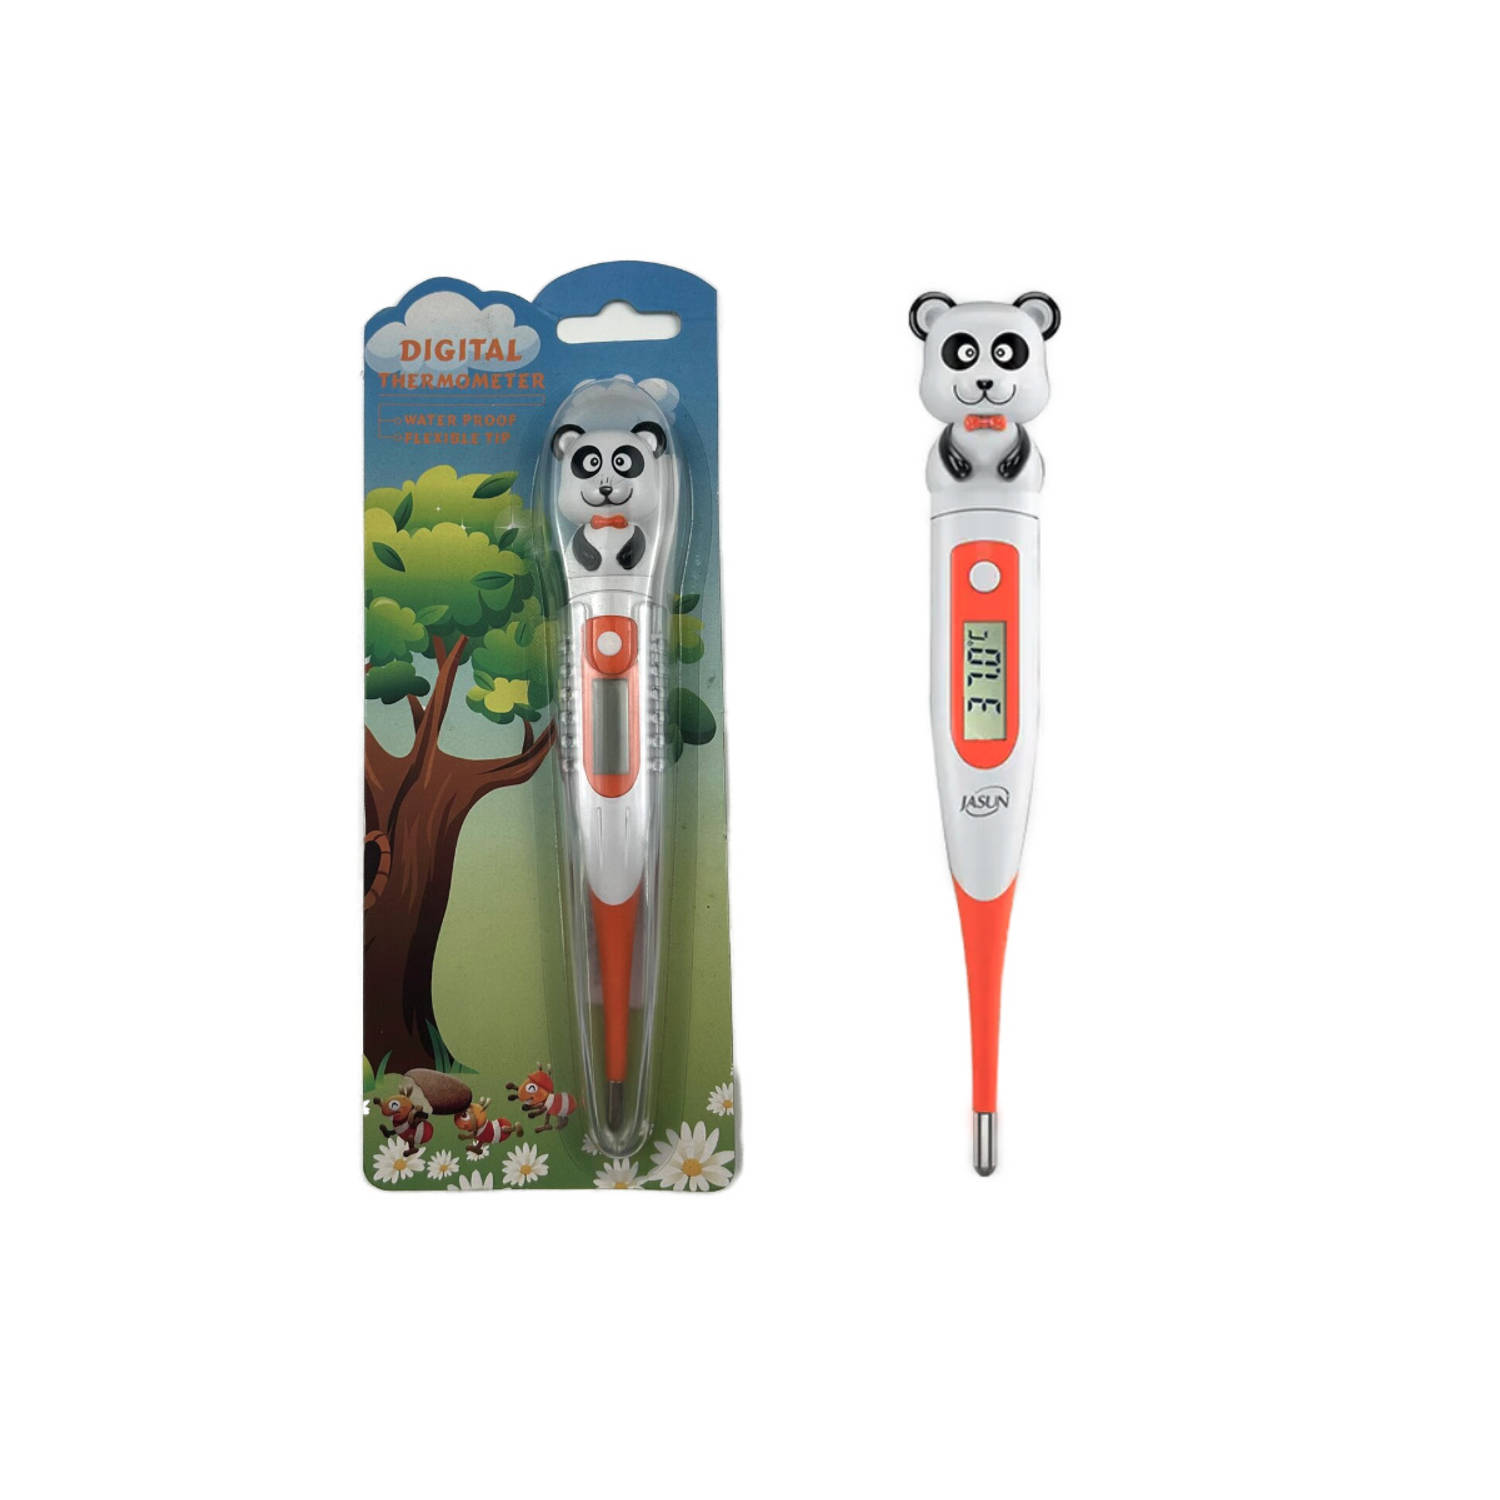 Digitale Baby Thermometer - Panda - Waterbestendig badthermometer